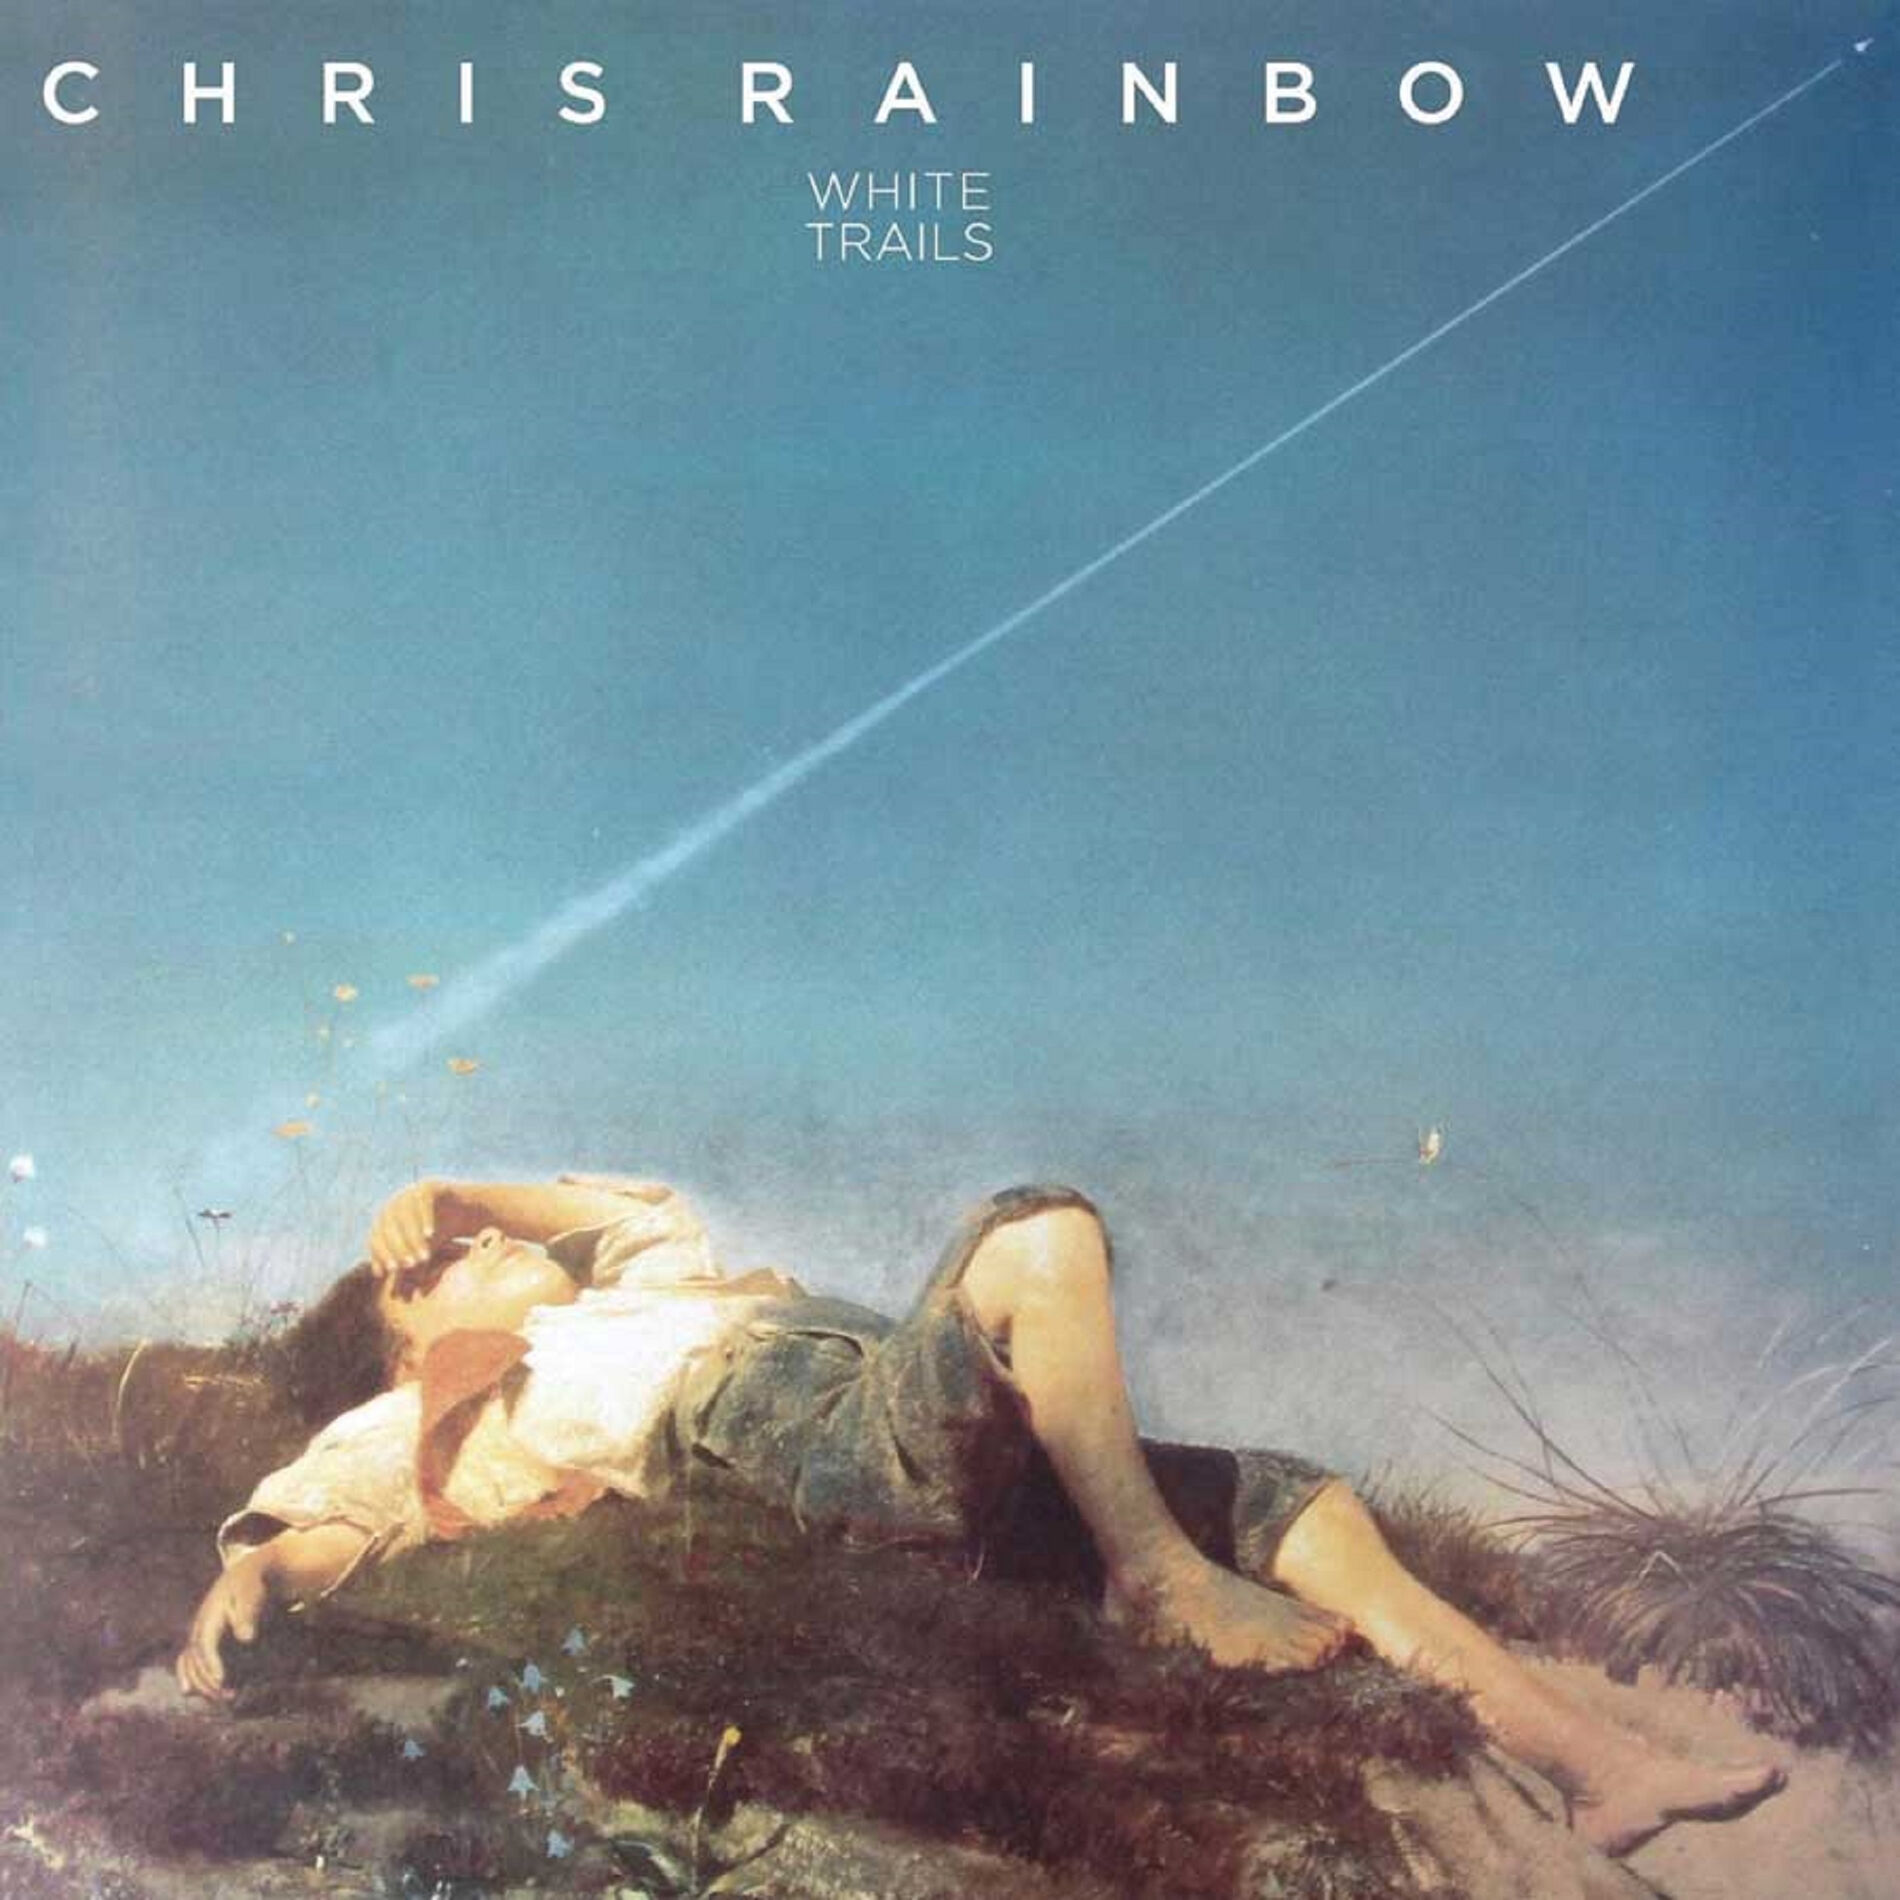 Chris Rainbow: albums, songs, playlists | Listen on Deezer